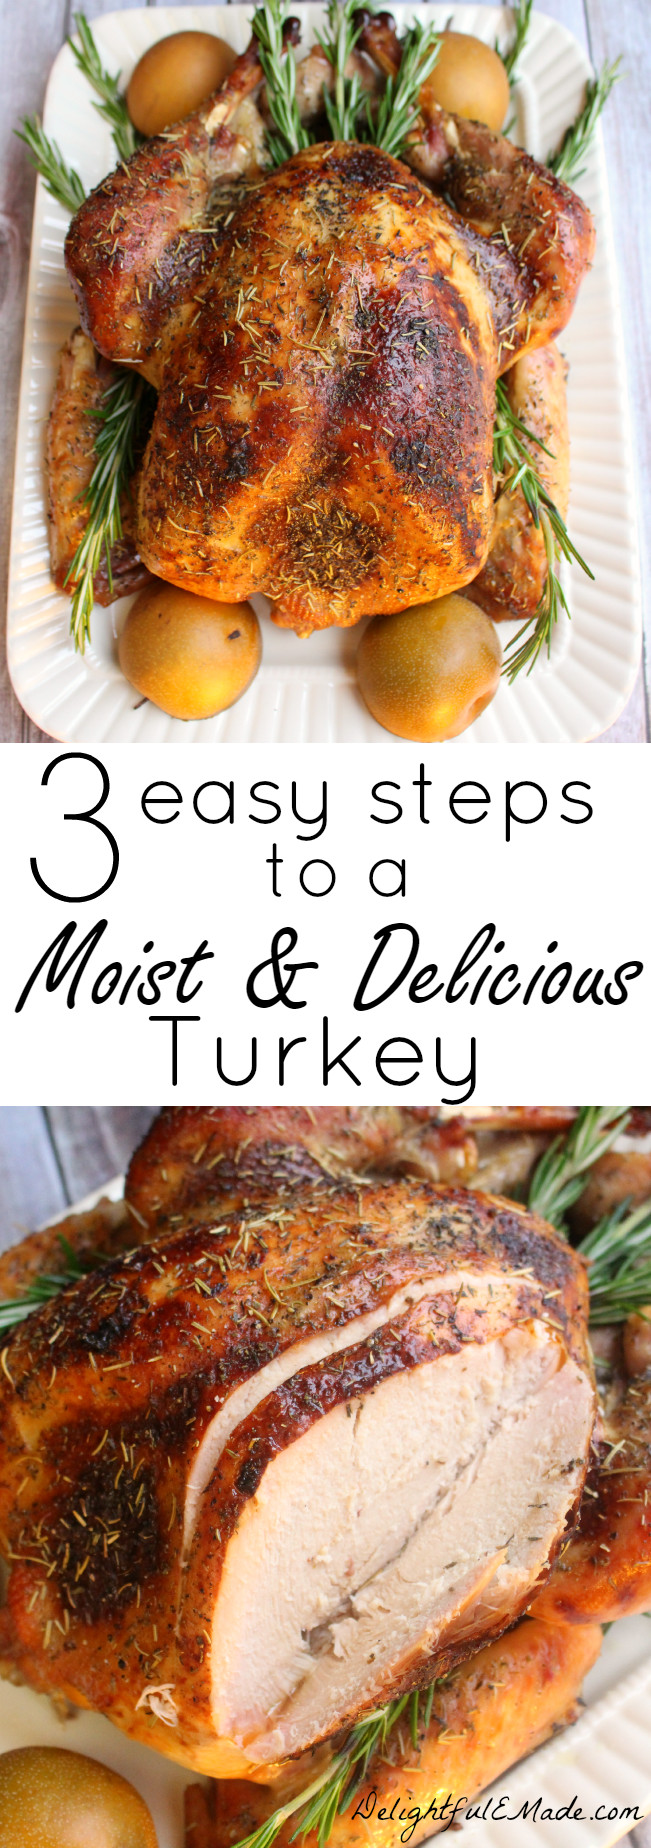 Easy Thanksgiving Turkey Recipe
 Tired of dry bland turkey I ll show you three easy steps